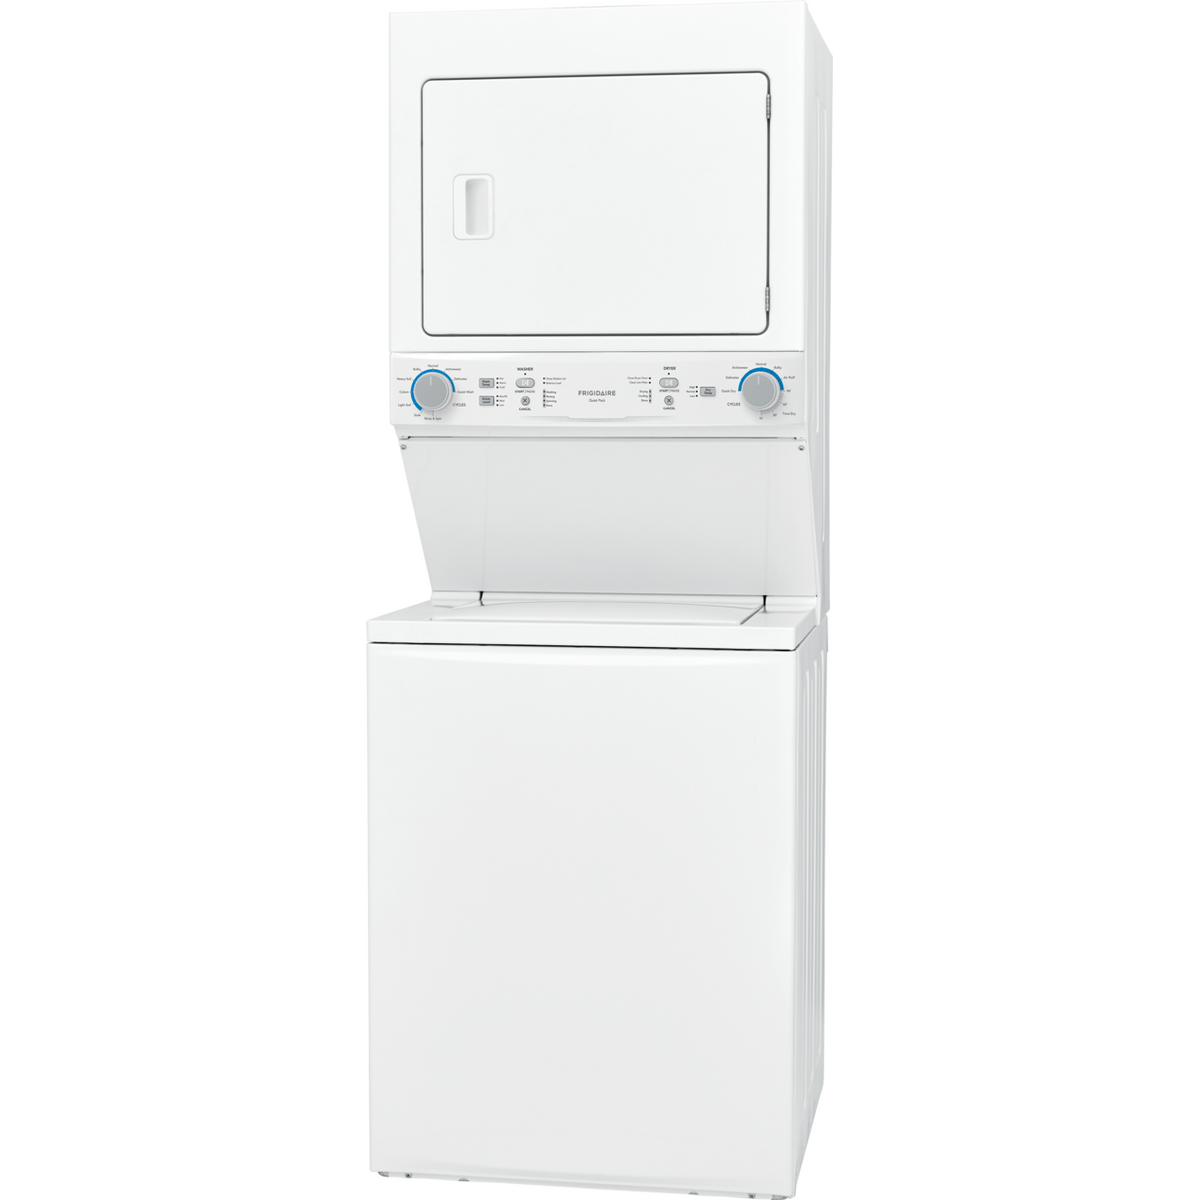 FRIGIDAIRE FLCG7522AW Gas Washer/Dryer Laundry Center